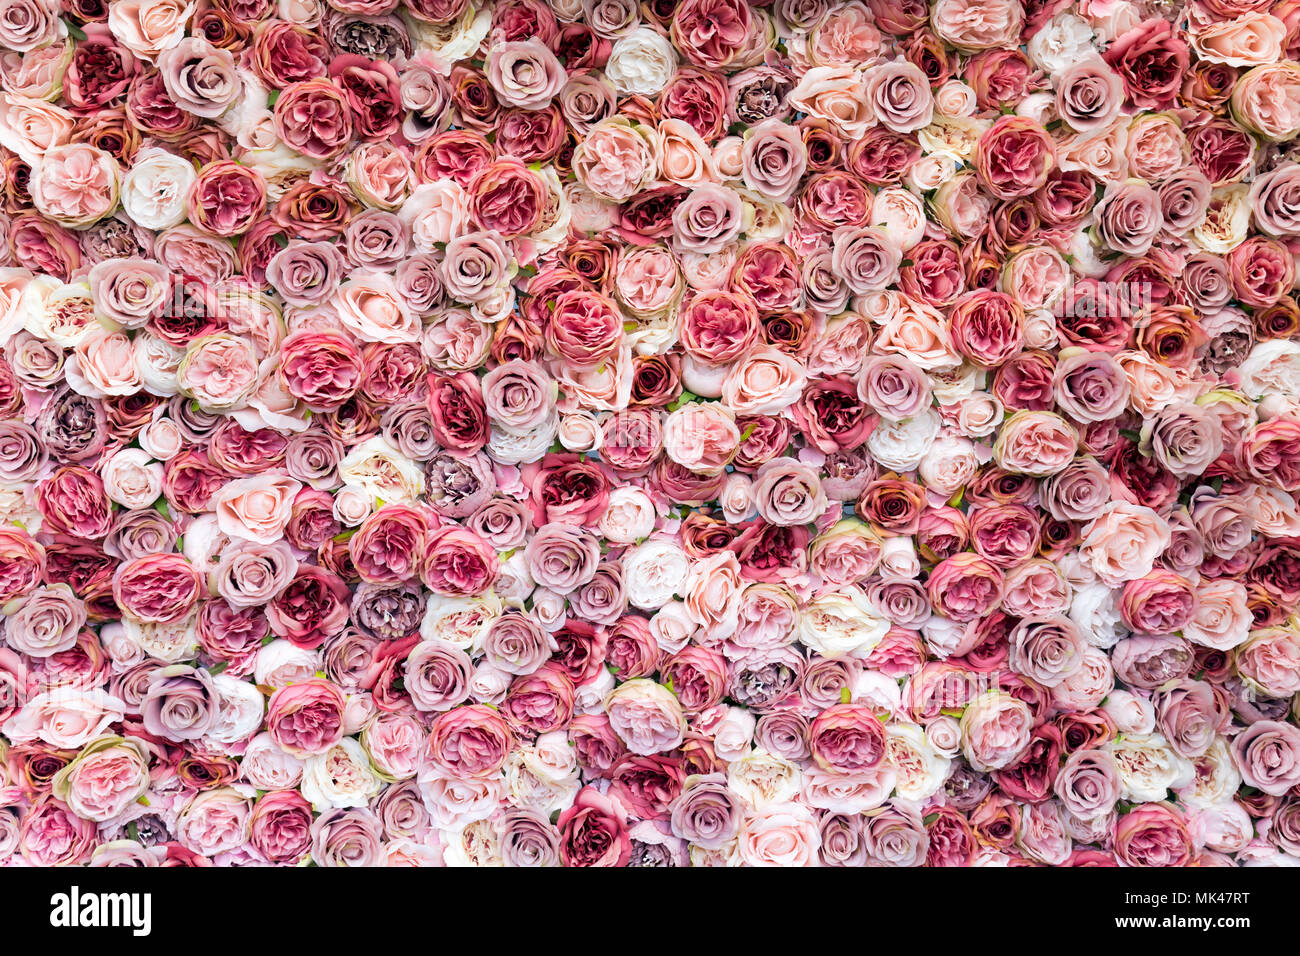 Muro de rosas en diferentes tonalidades de color rosa de fondo Foto de stock